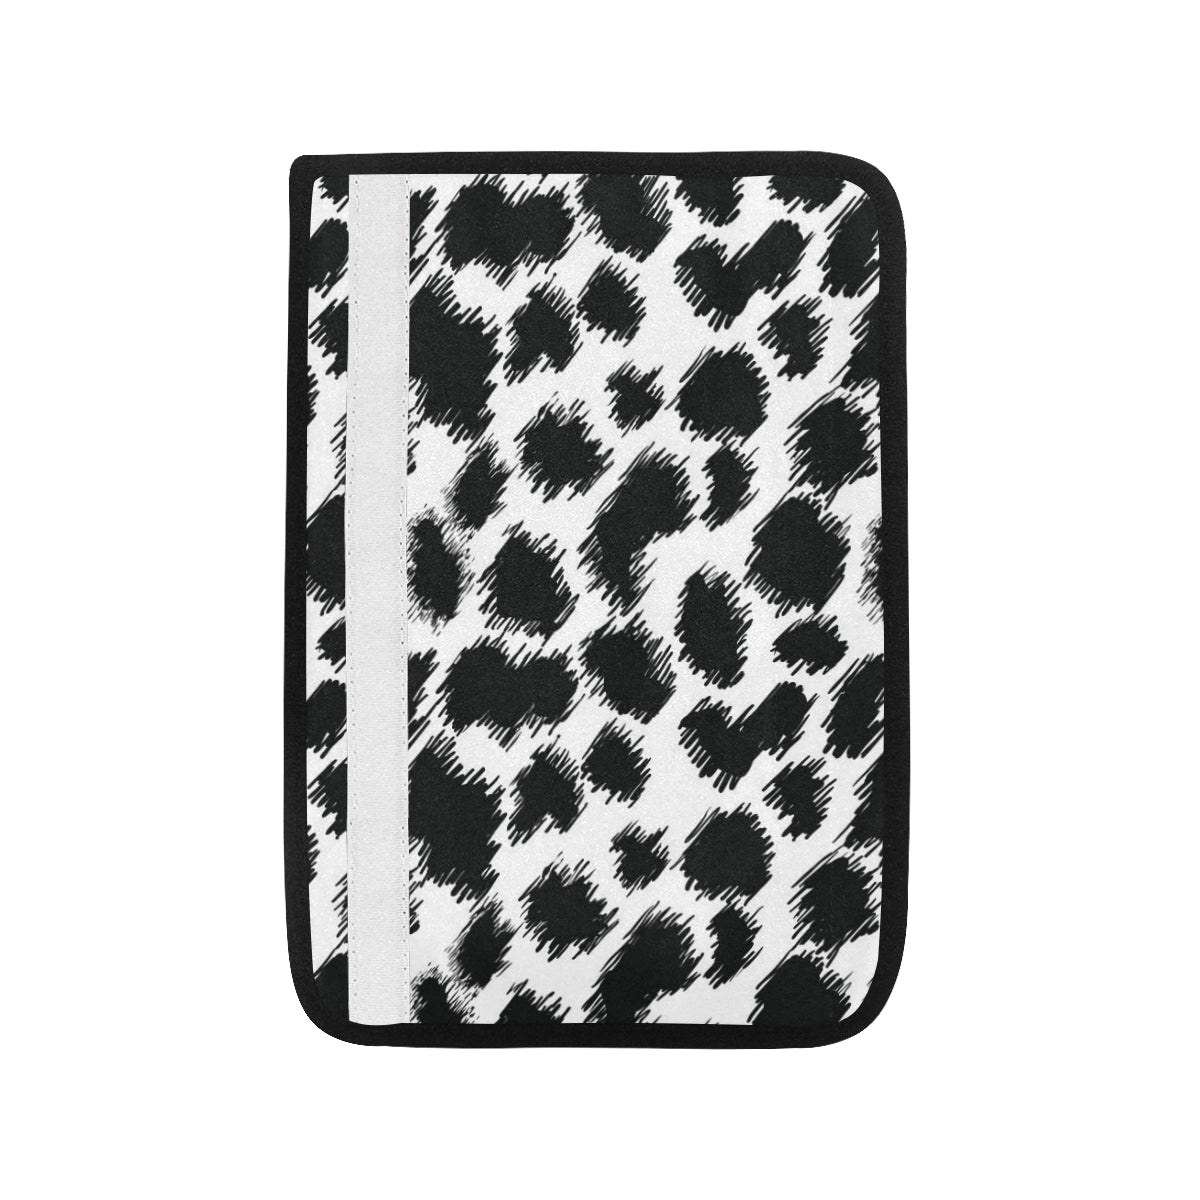 Cheetah Black Print Pattern Car Seat Belt Cover